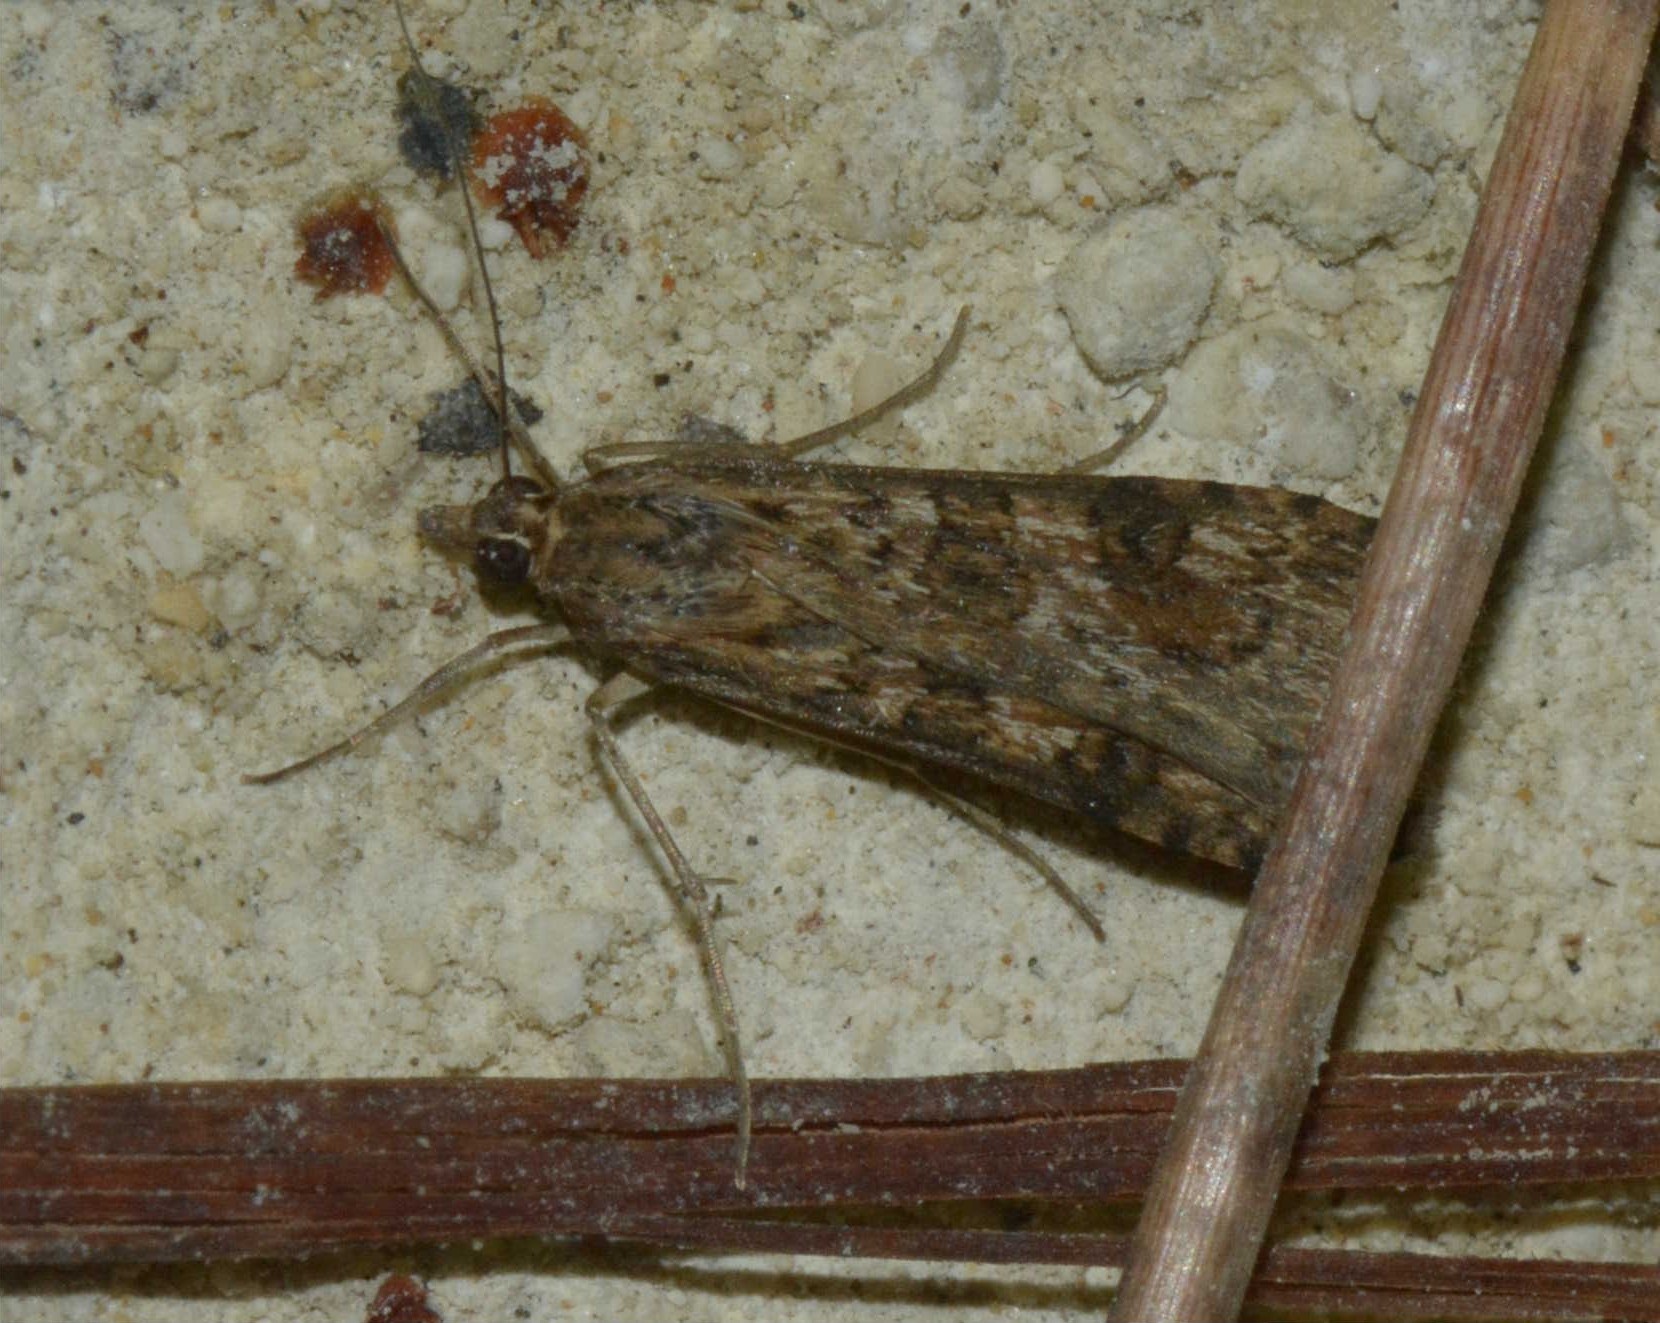 Nomophila noctuella West Hazel Saint-Trojan-les-Bains 17 17082015